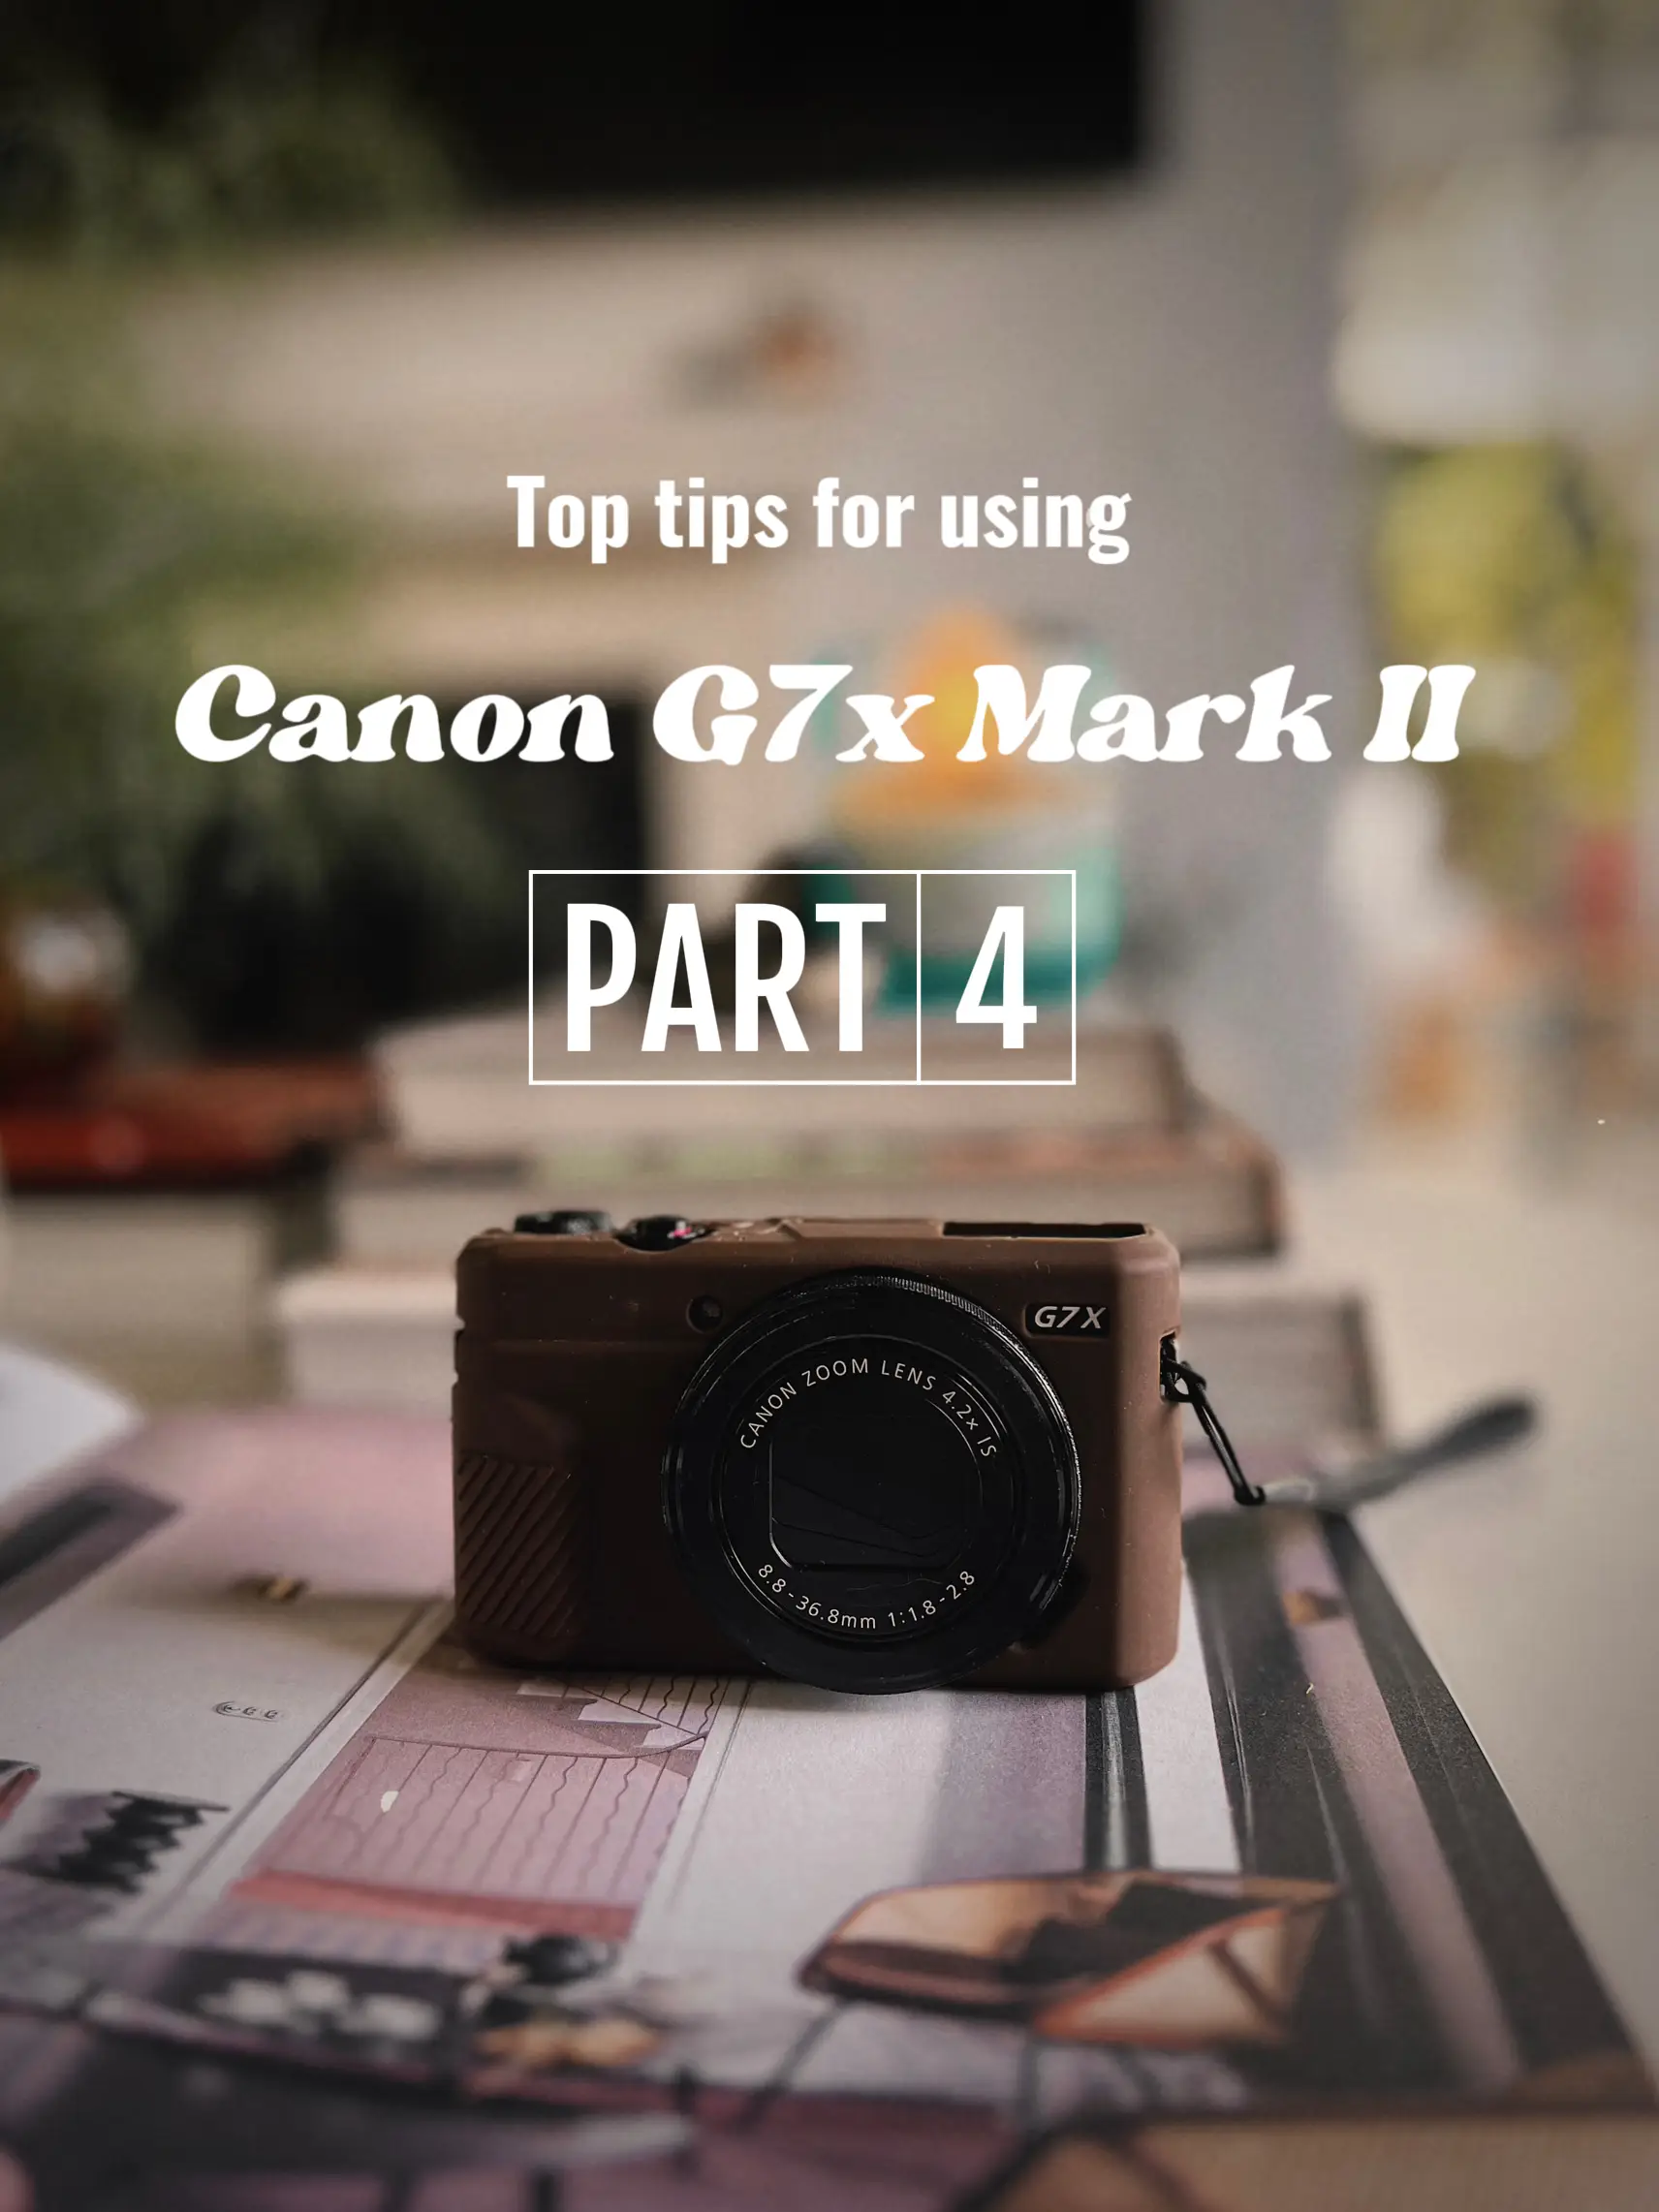 Canon G7X Mark II - A Helpful Guide - Video & Motion Design Tutorials.